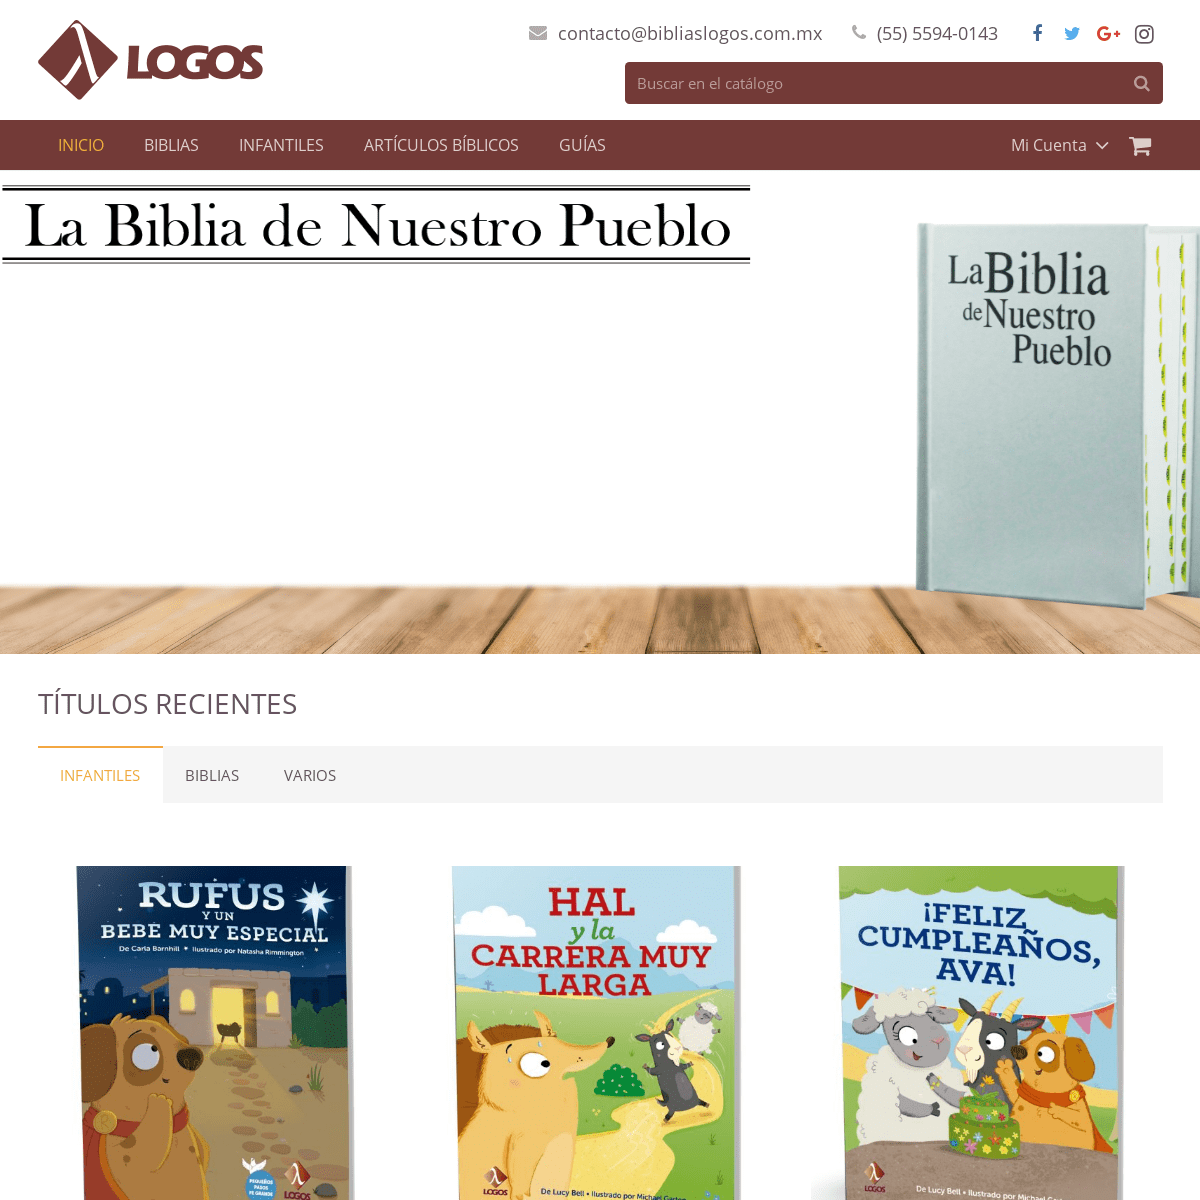 A complete backup of bibliaslogos.com.mx